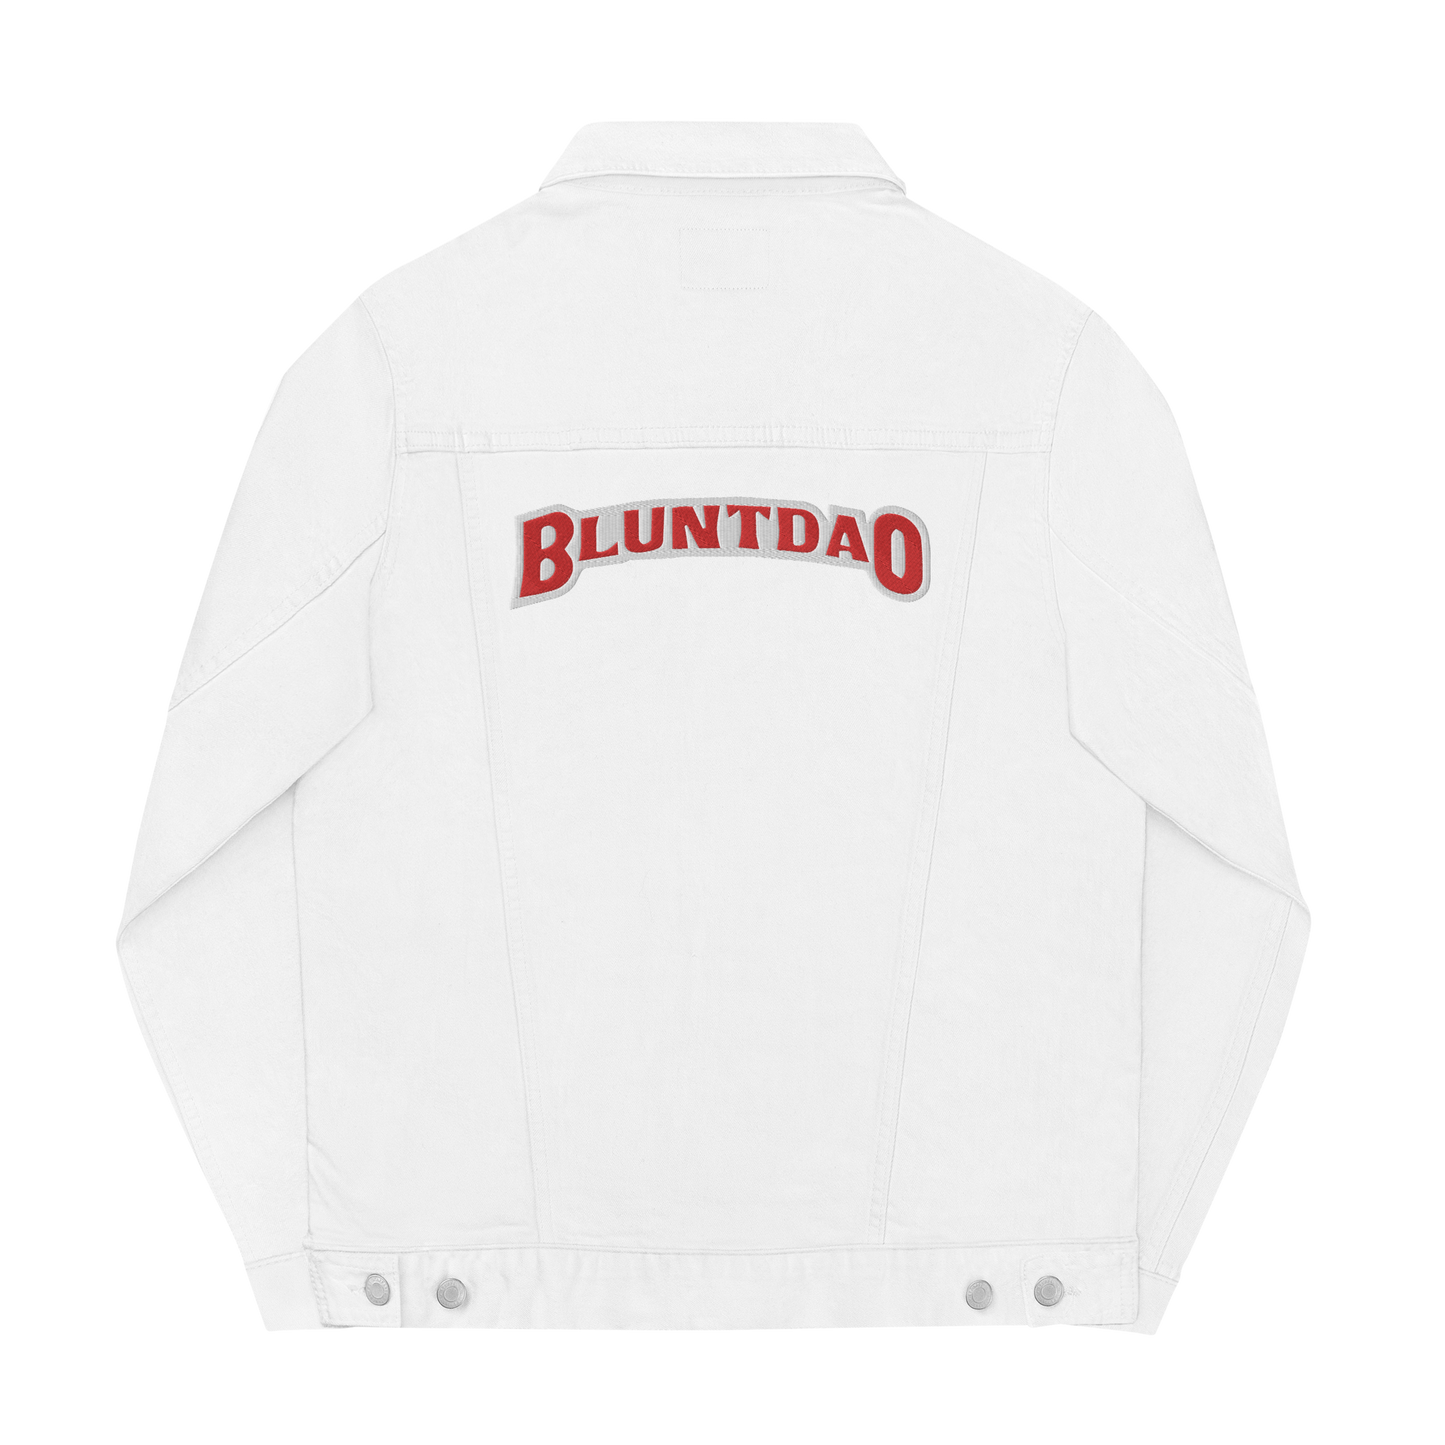 BluntDAO Embroidery Unisex Denim Jacket